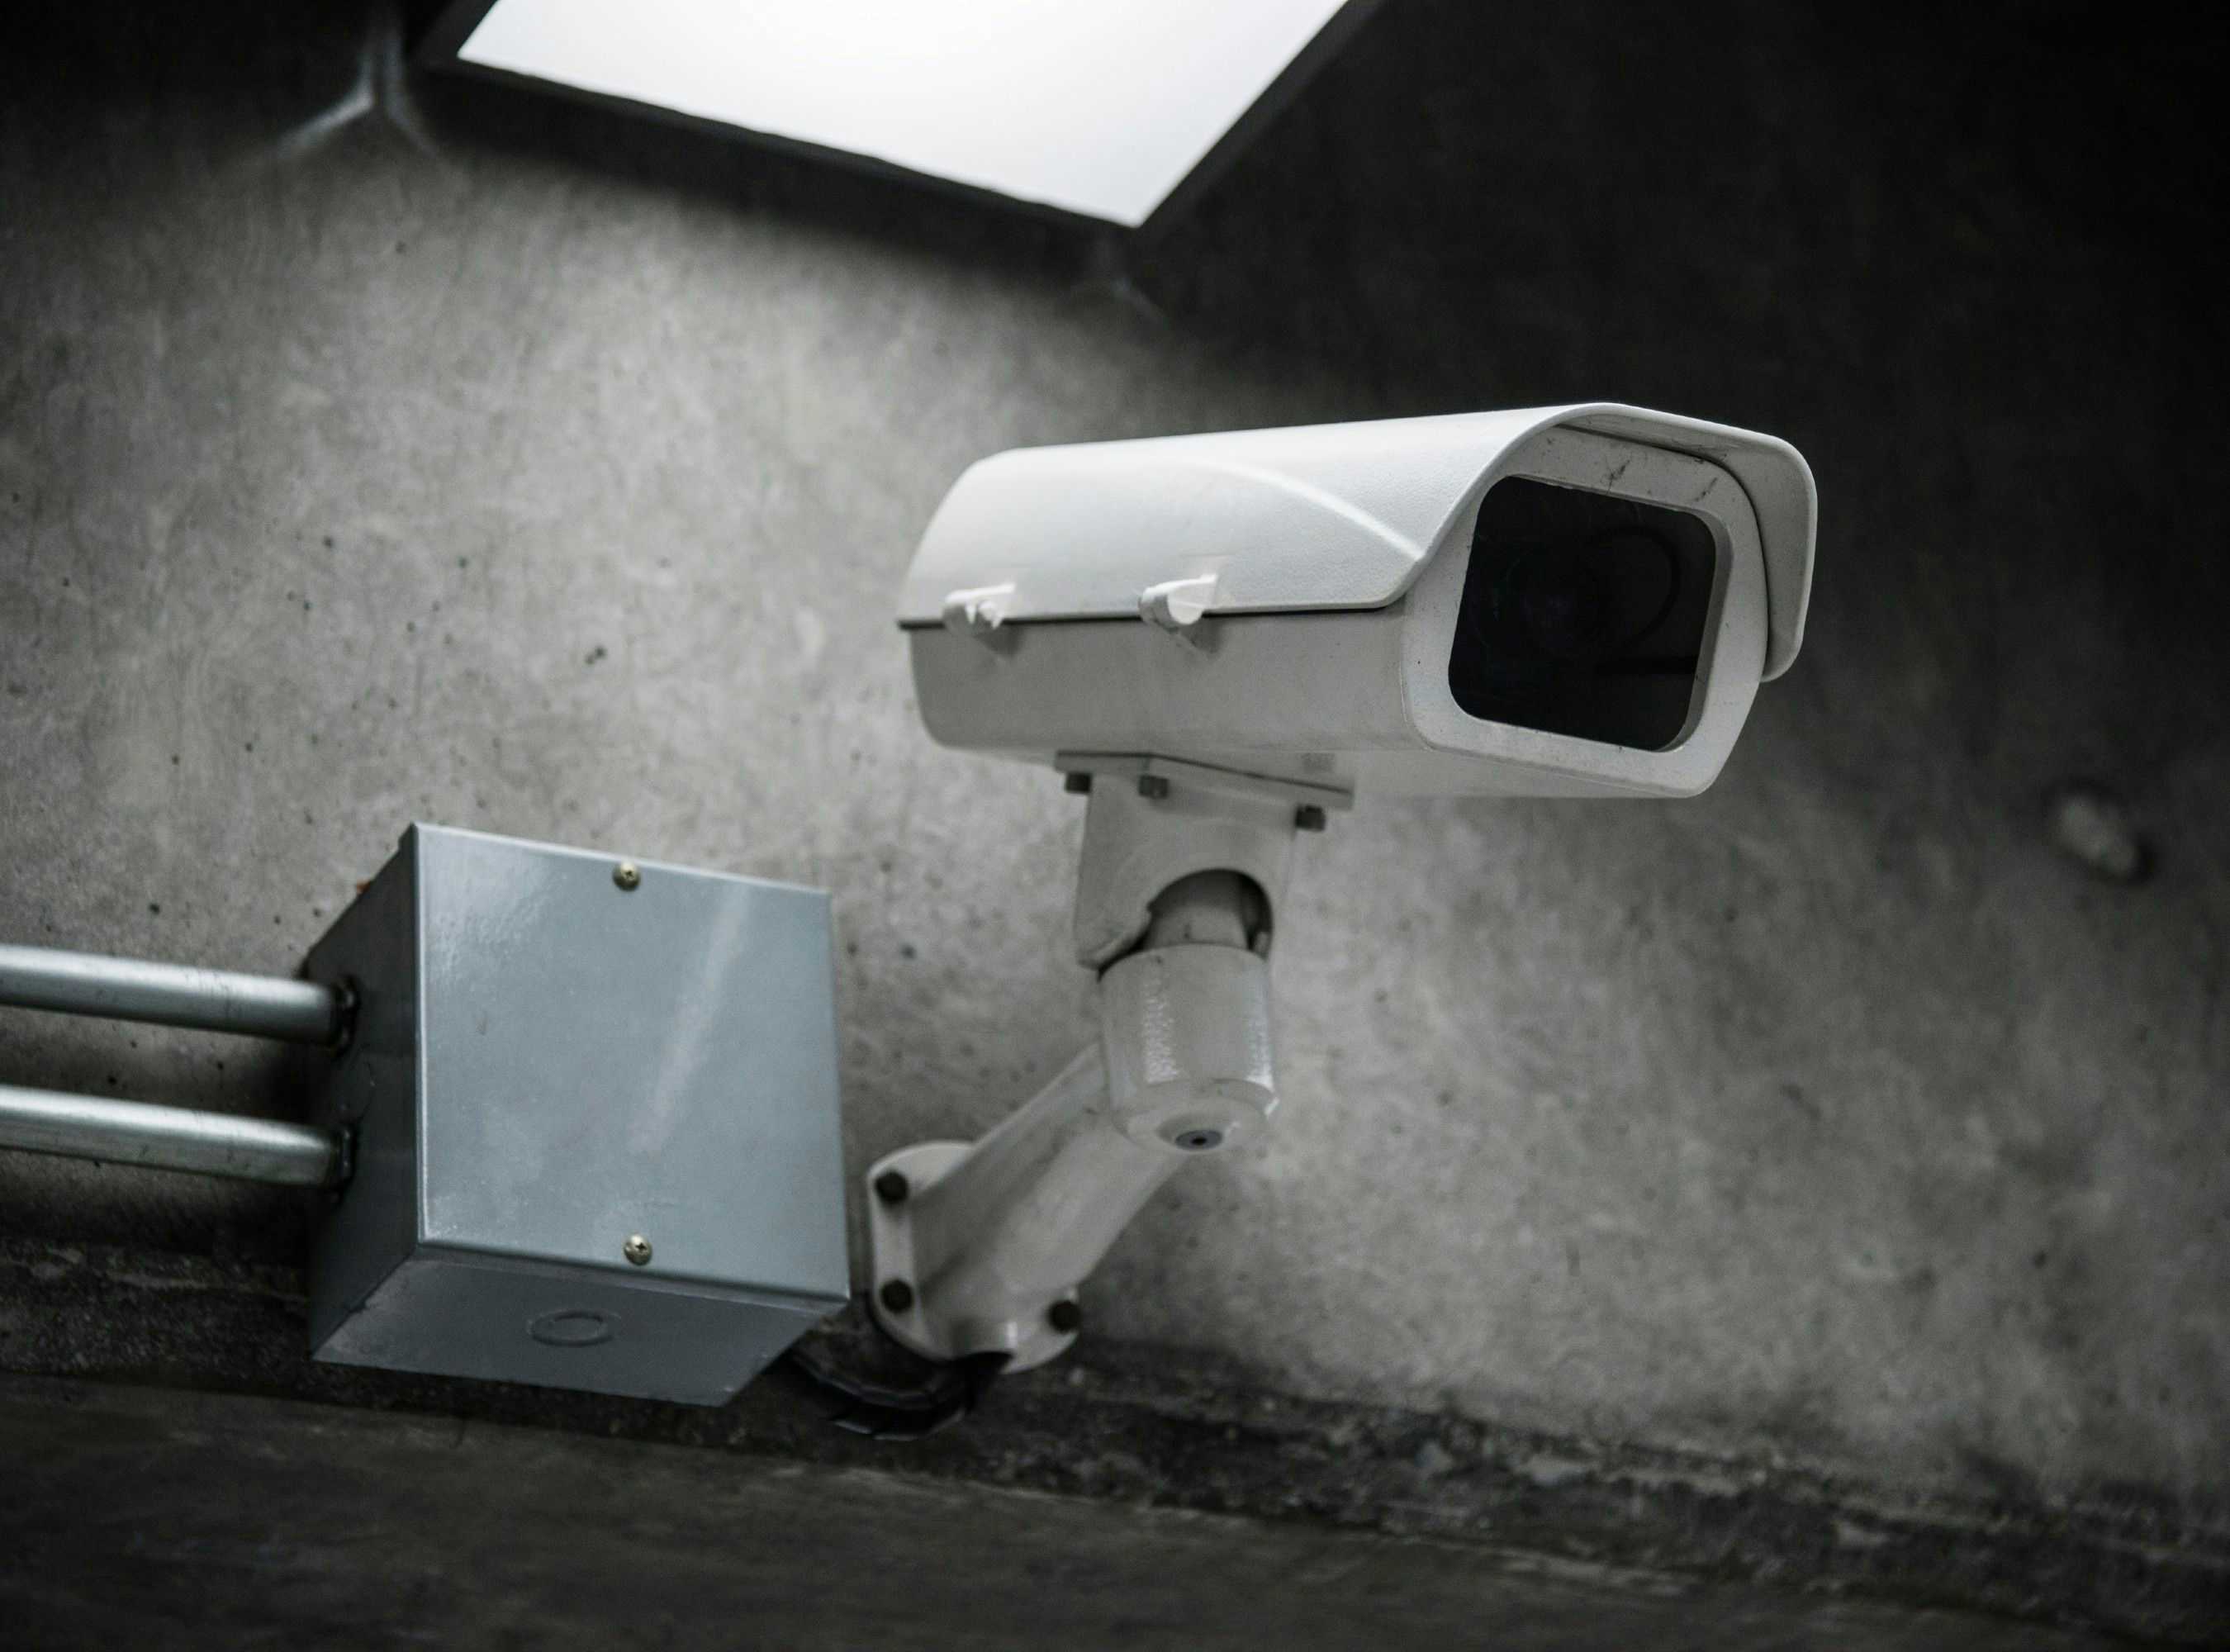 Security Expert’s Conclusions on CVS Surveillance Deemed Extrapolation